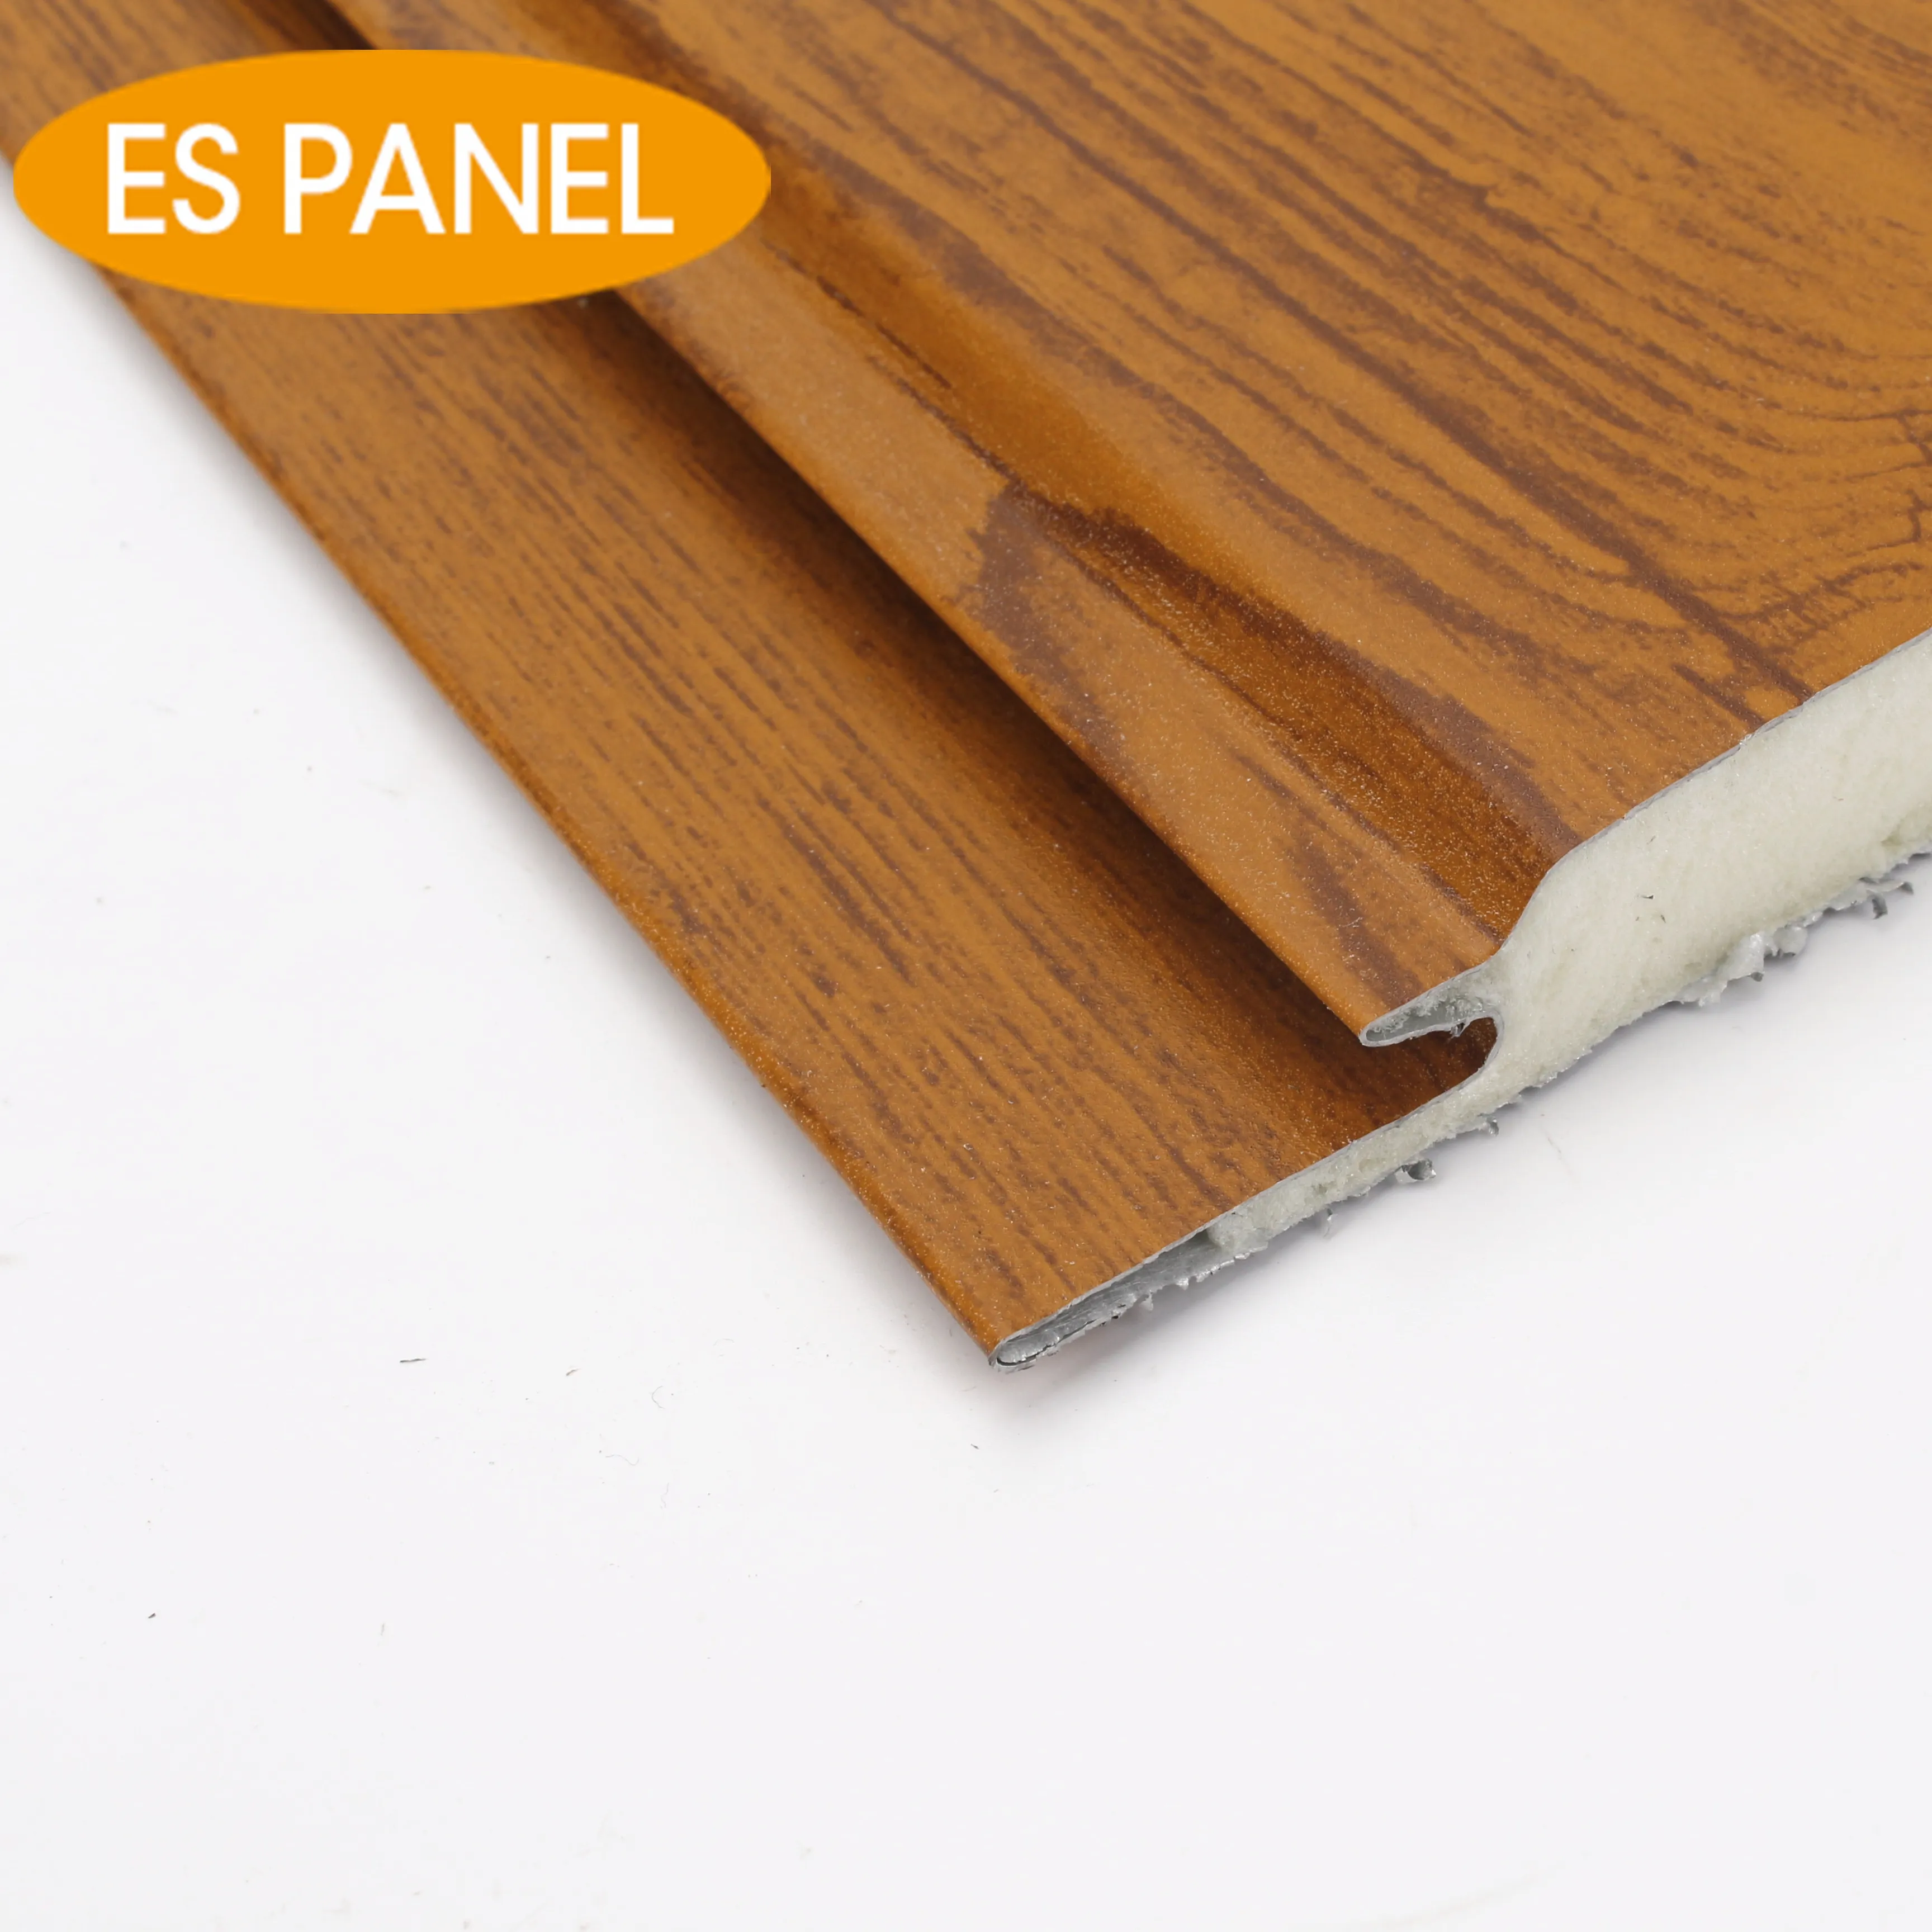 ES PANEL Interior Exterior wood grain cheap bathroom metal wall siding panel